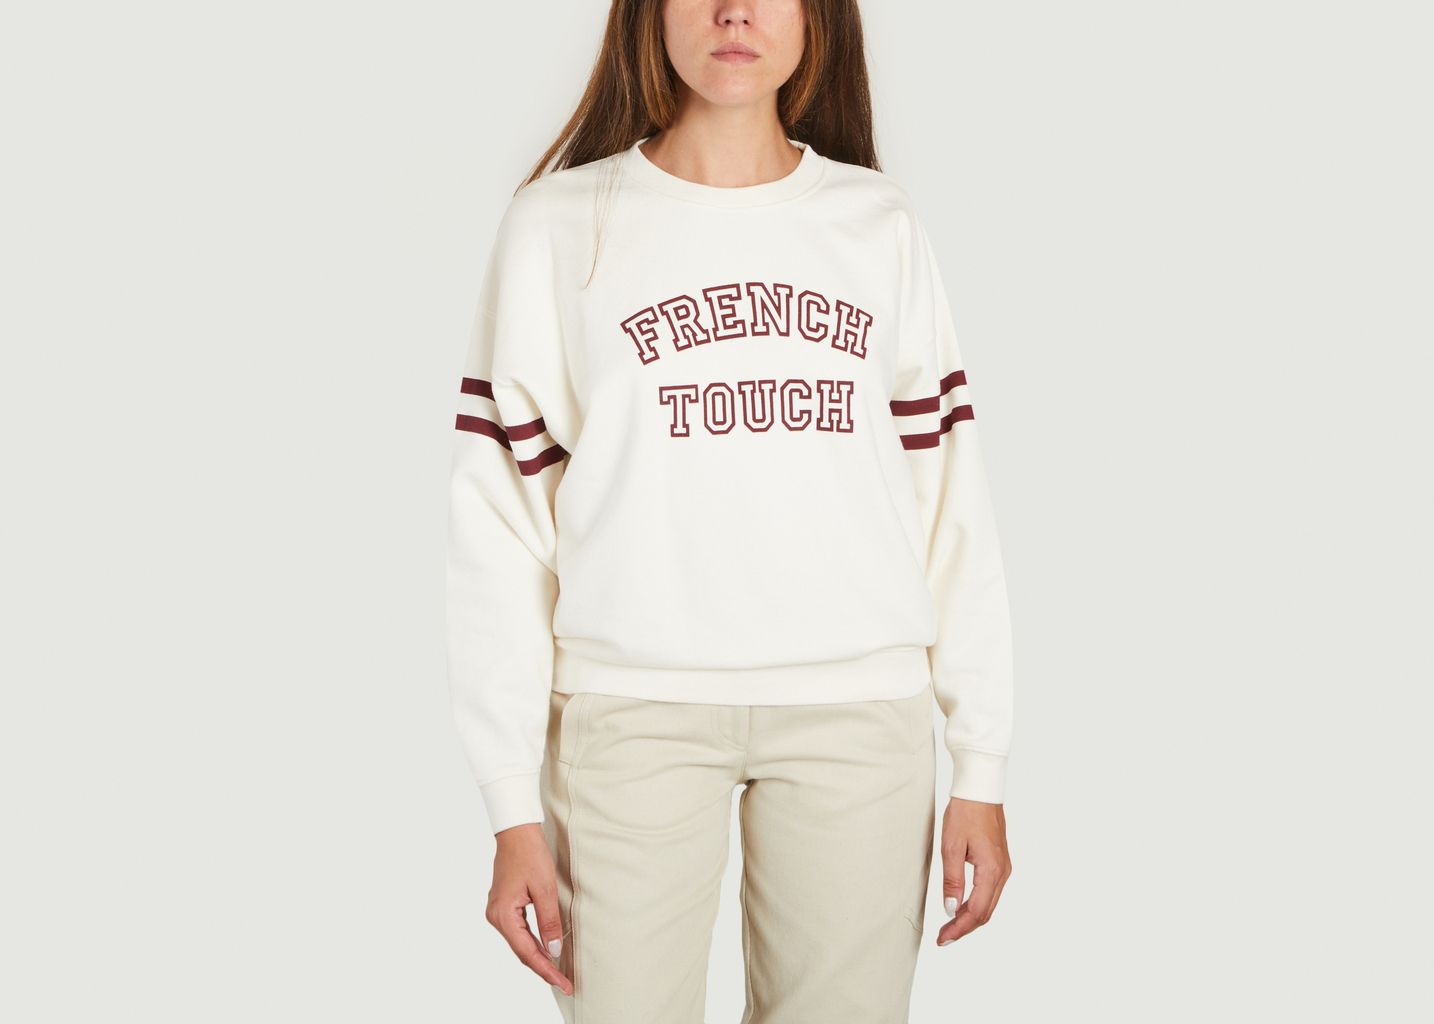 French Touch premium fleece sweatshirt  - French Disorder